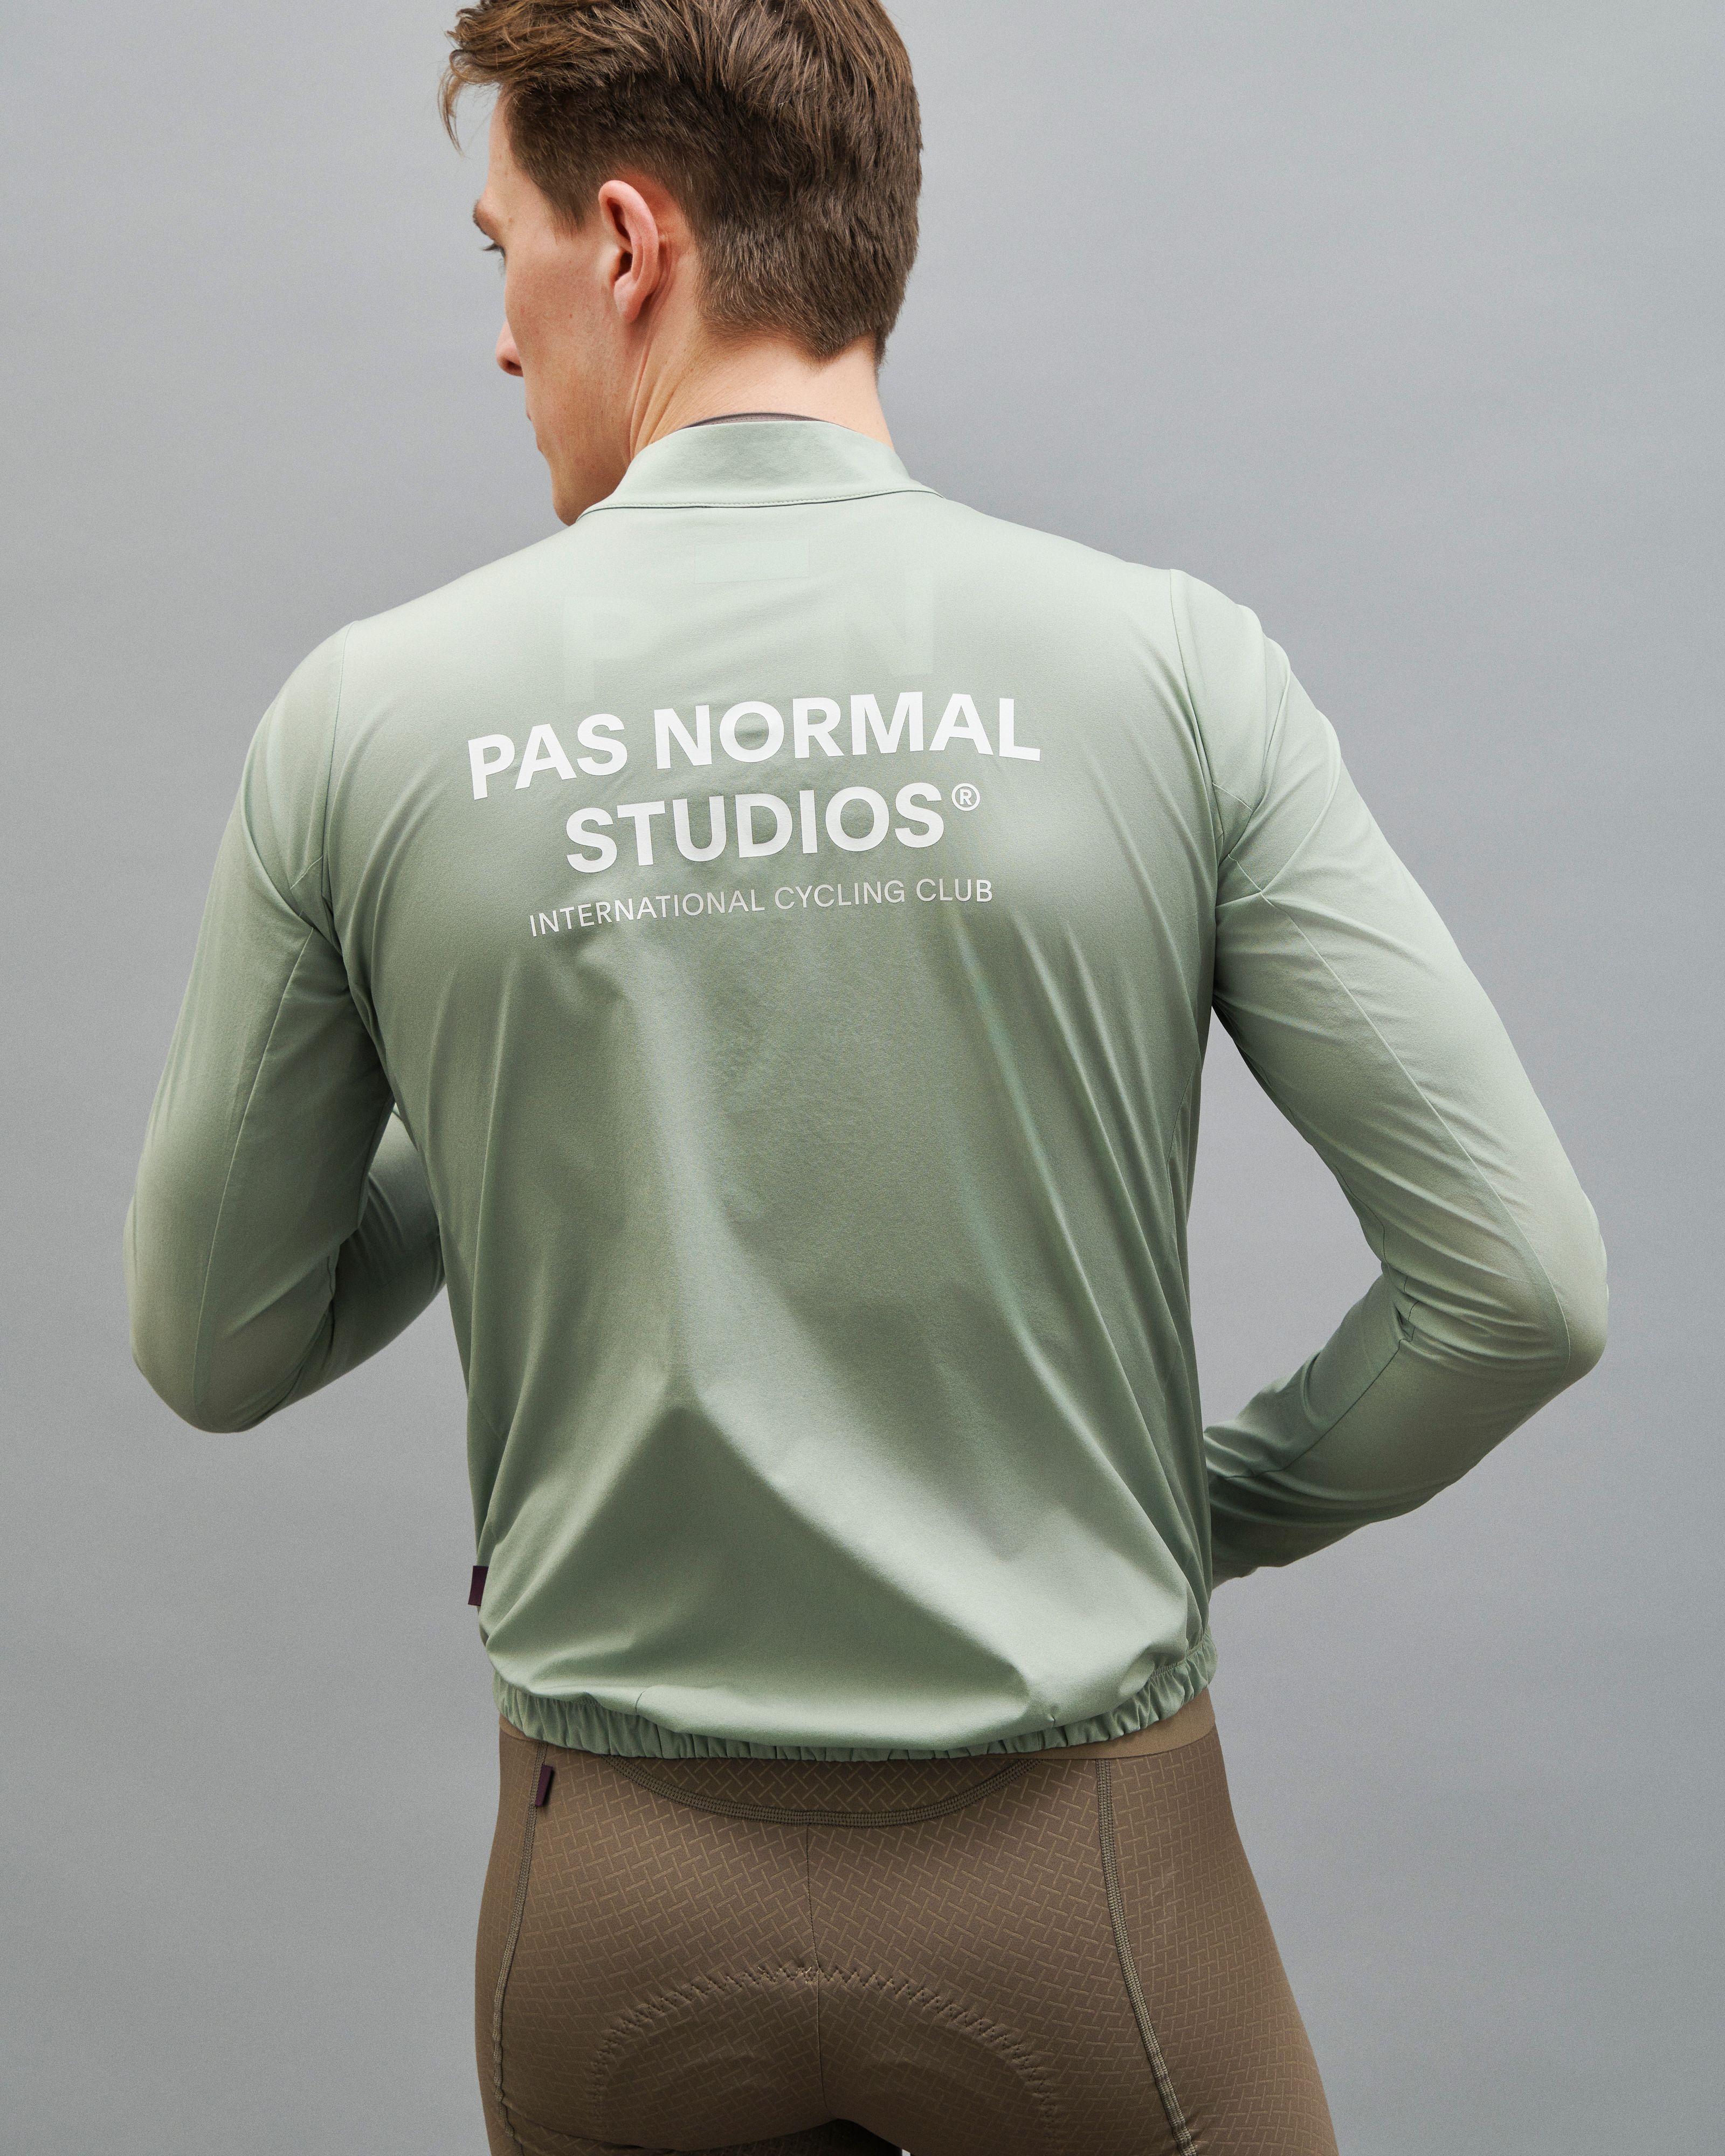 Men's Cycling Jackets & Gilets | Pas Normal Studios